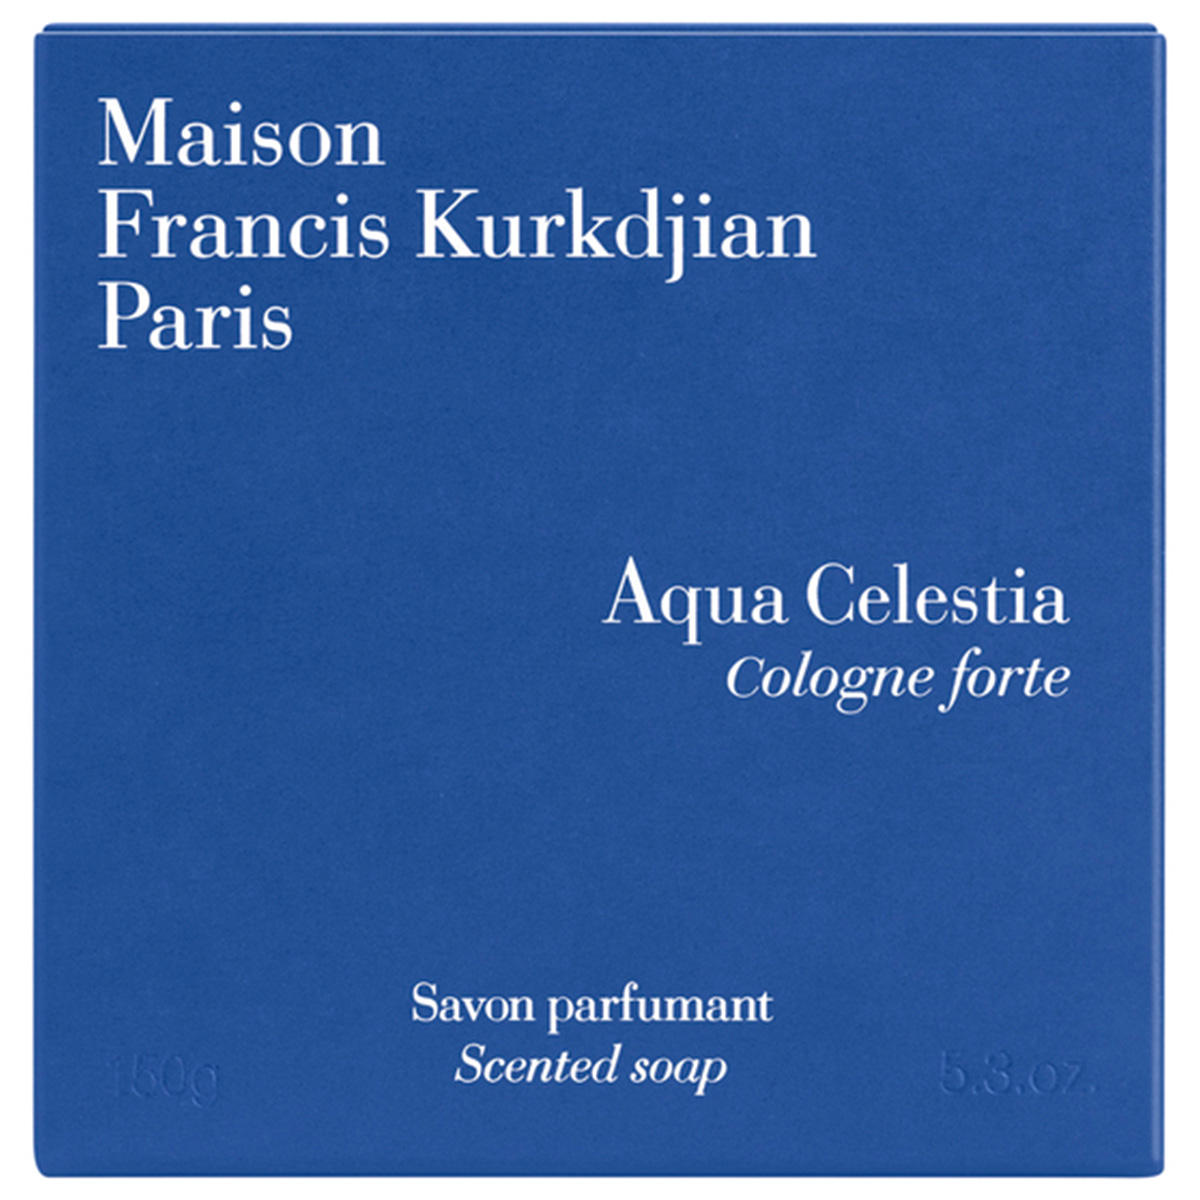 Maison Francis Kurkdjian Paris Aqua Celestia Cologne forte Soap 150 g - 2